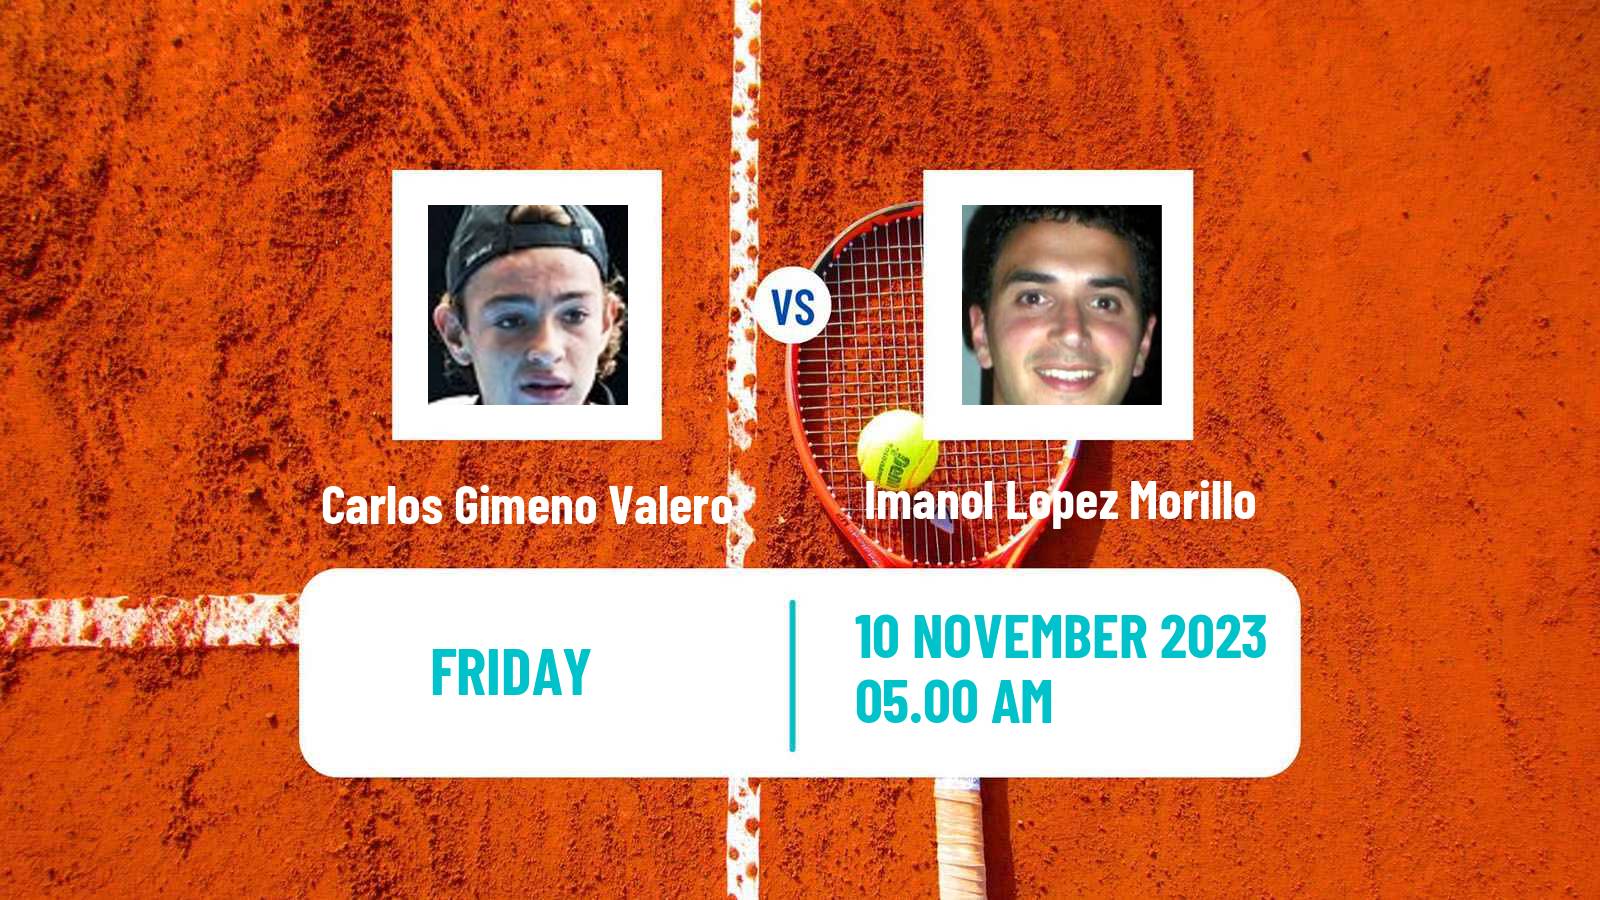 Tennis ITF M25 Benicarlo Men Carlos Gimeno Valero - Imanol Lopez Morillo